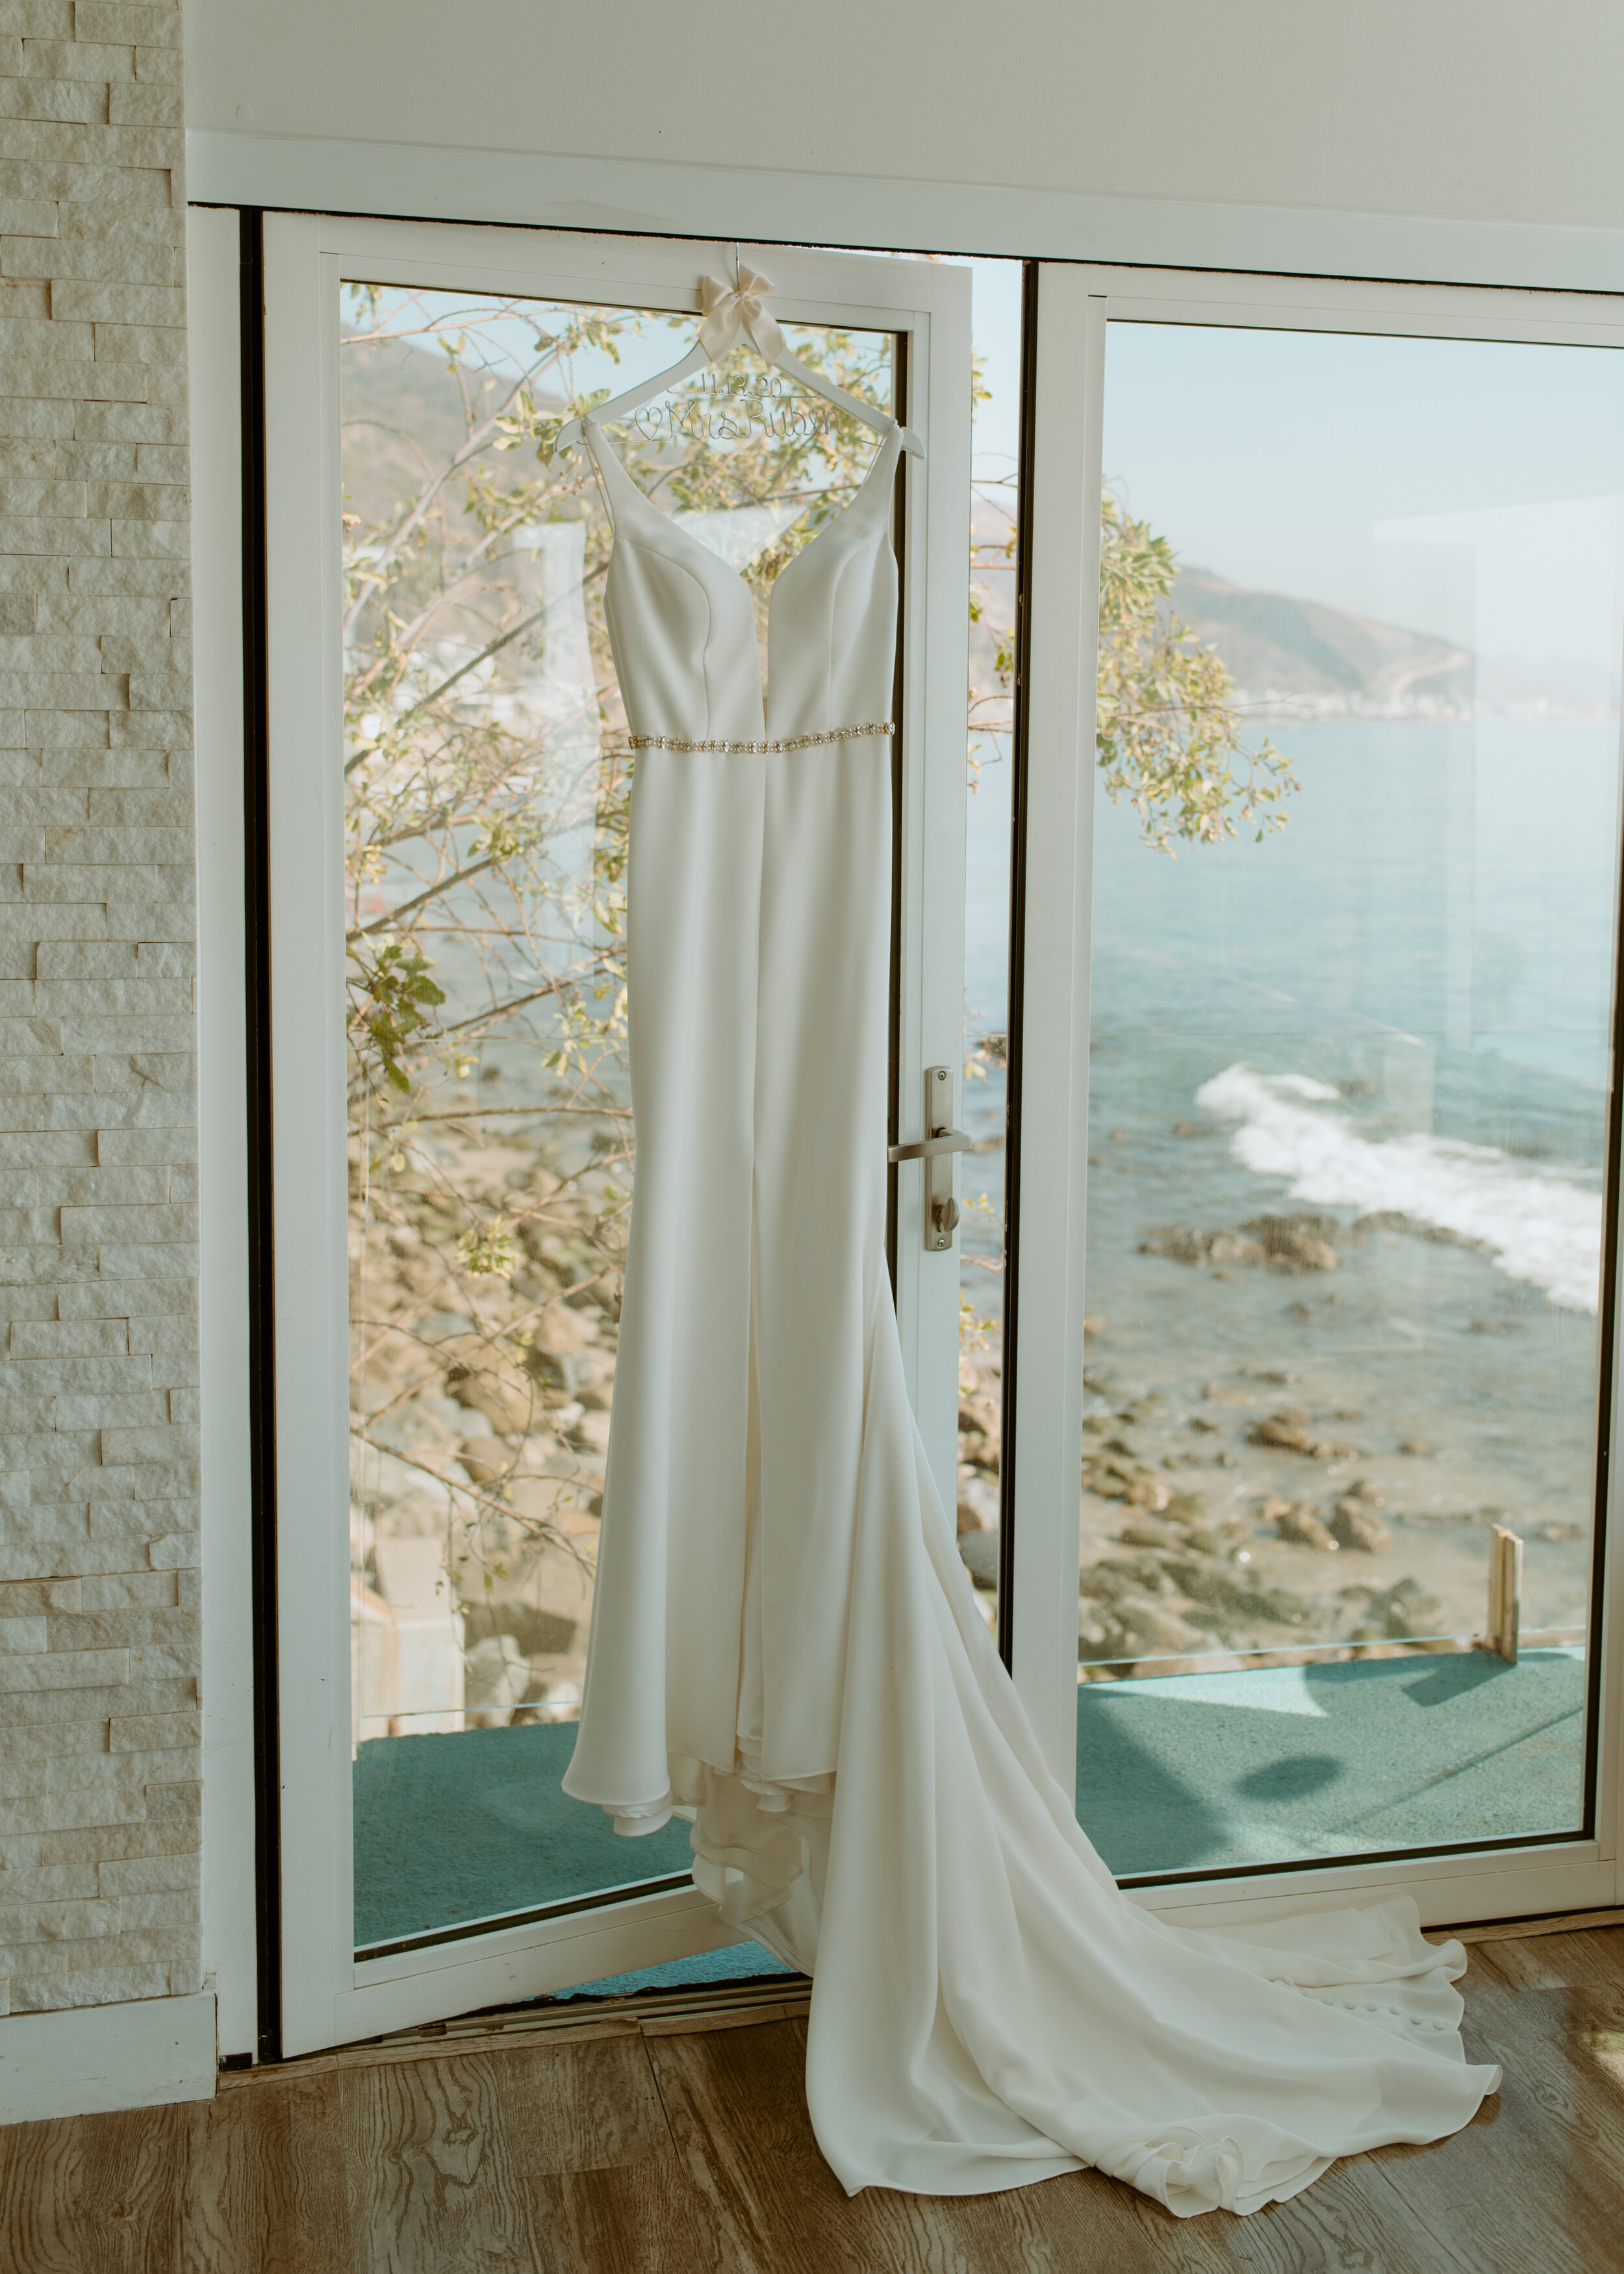 Malibu Airbnb Elopement | El Matador Beach wedding | Point Dume Malibu Bride and Groom portraits | California Coast | California Elopement photographer | Wedding Getting Ready Details 